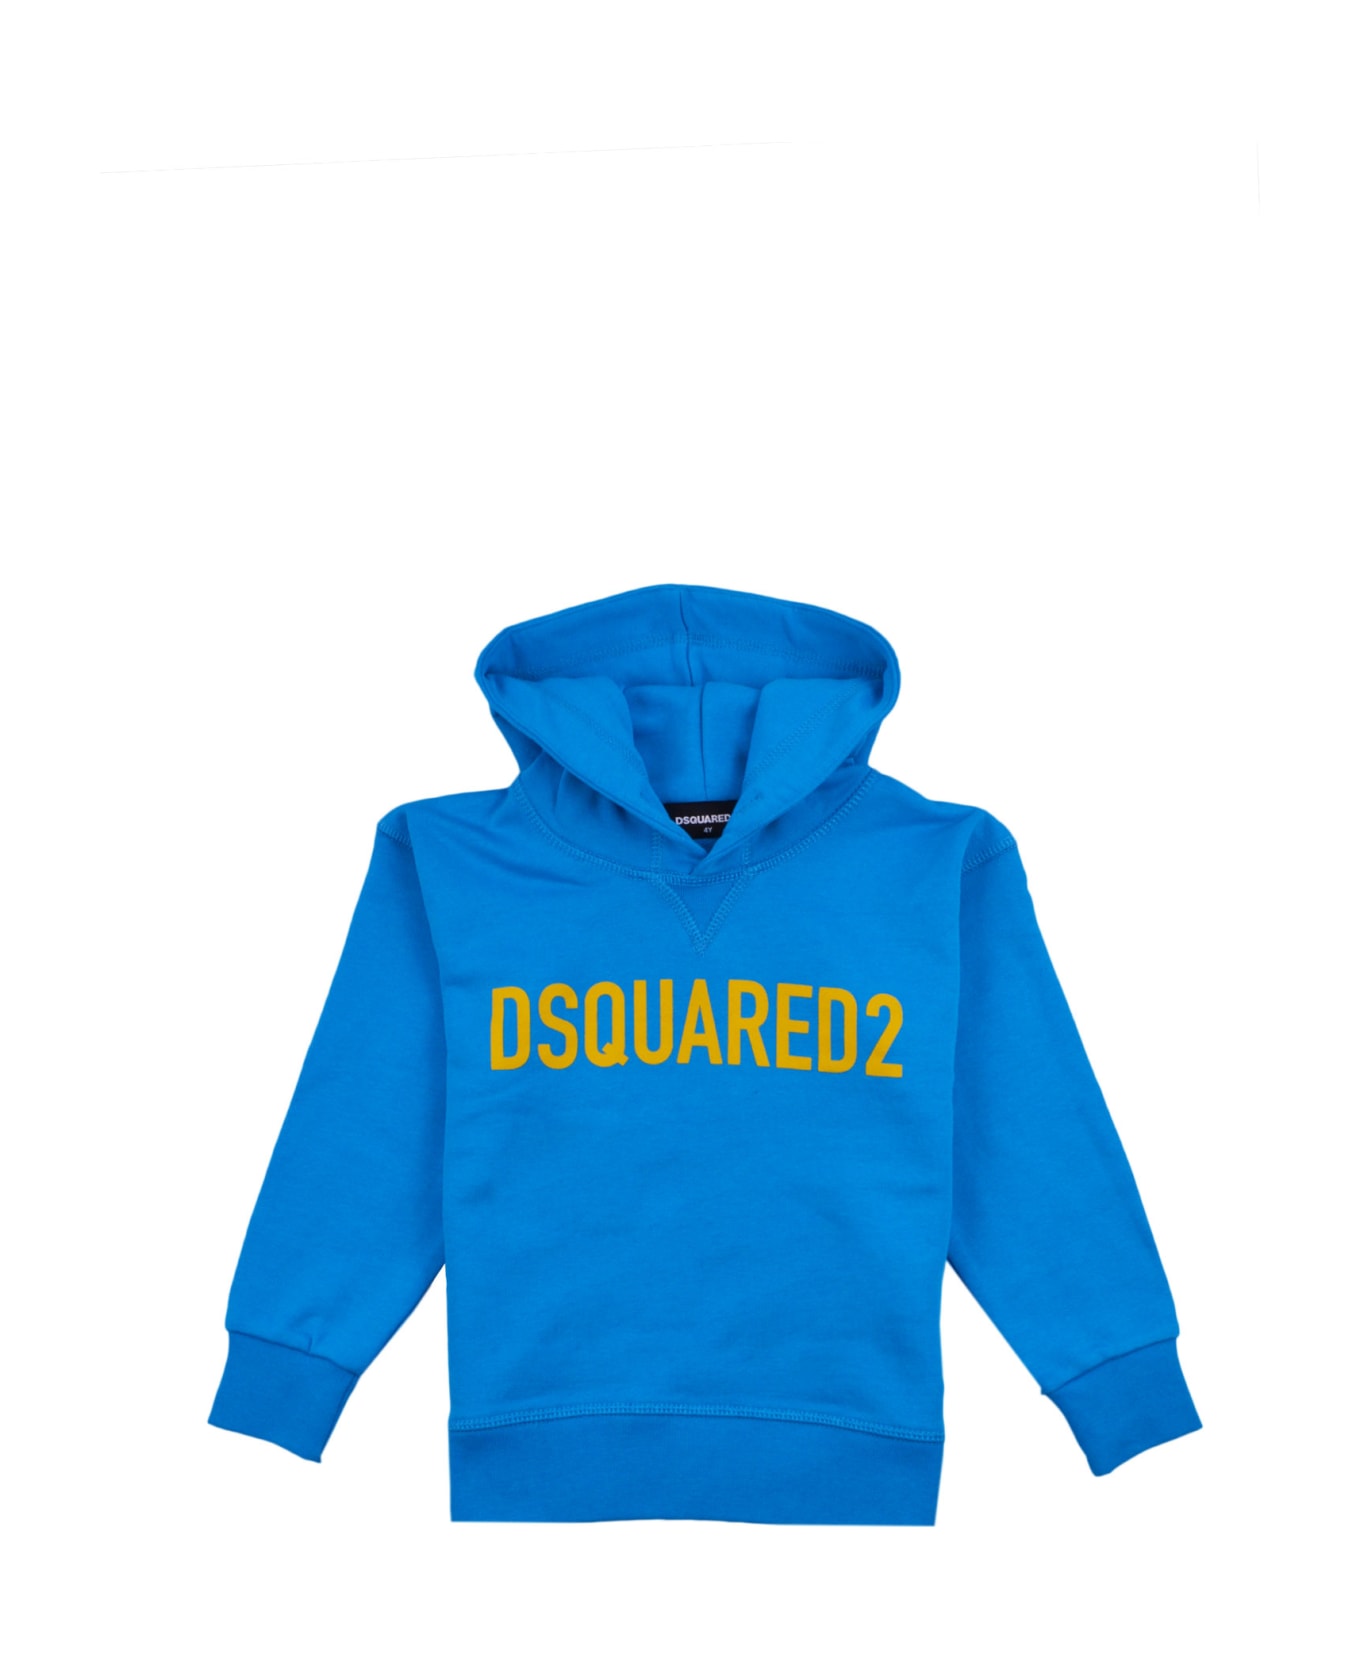 Dsquared2 Cotton Sweatshirt With Hood - Light blue